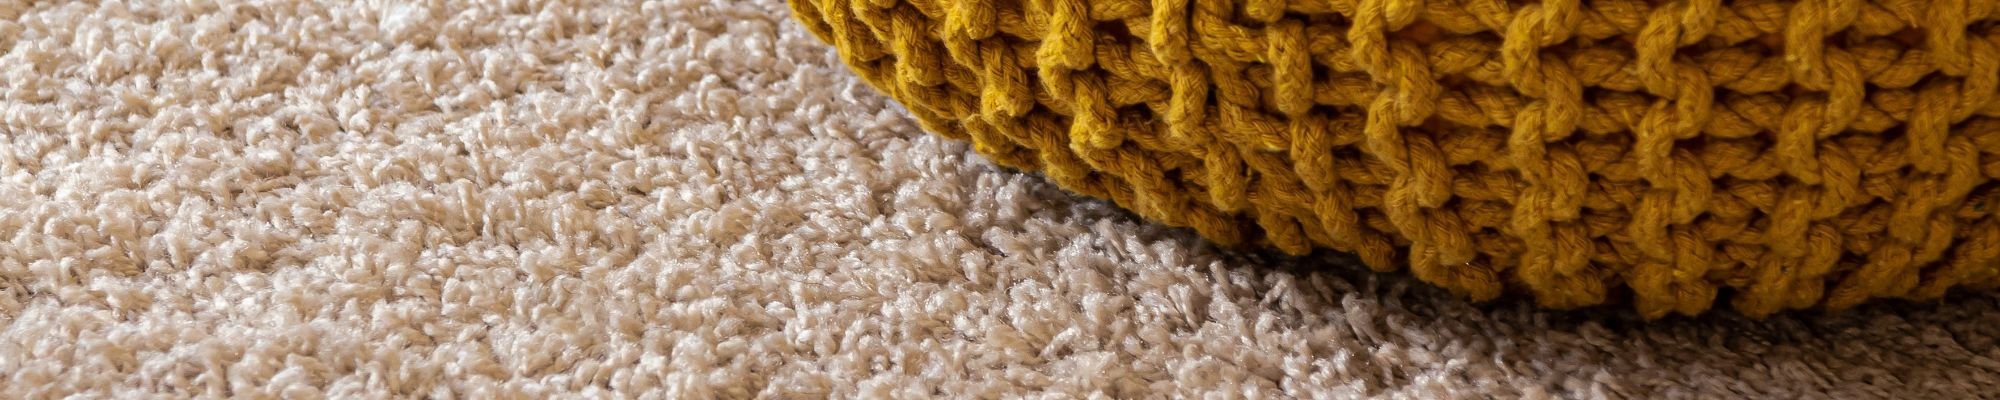 Carpet or Area Rug